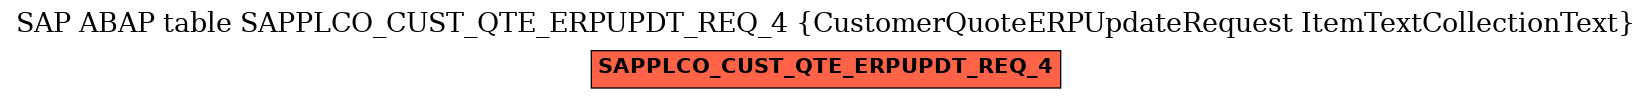 E-R Diagram for table SAPPLCO_CUST_QTE_ERPUPDT_REQ_4 (CustomerQuoteERPUpdateRequest ItemTextCollectionText)